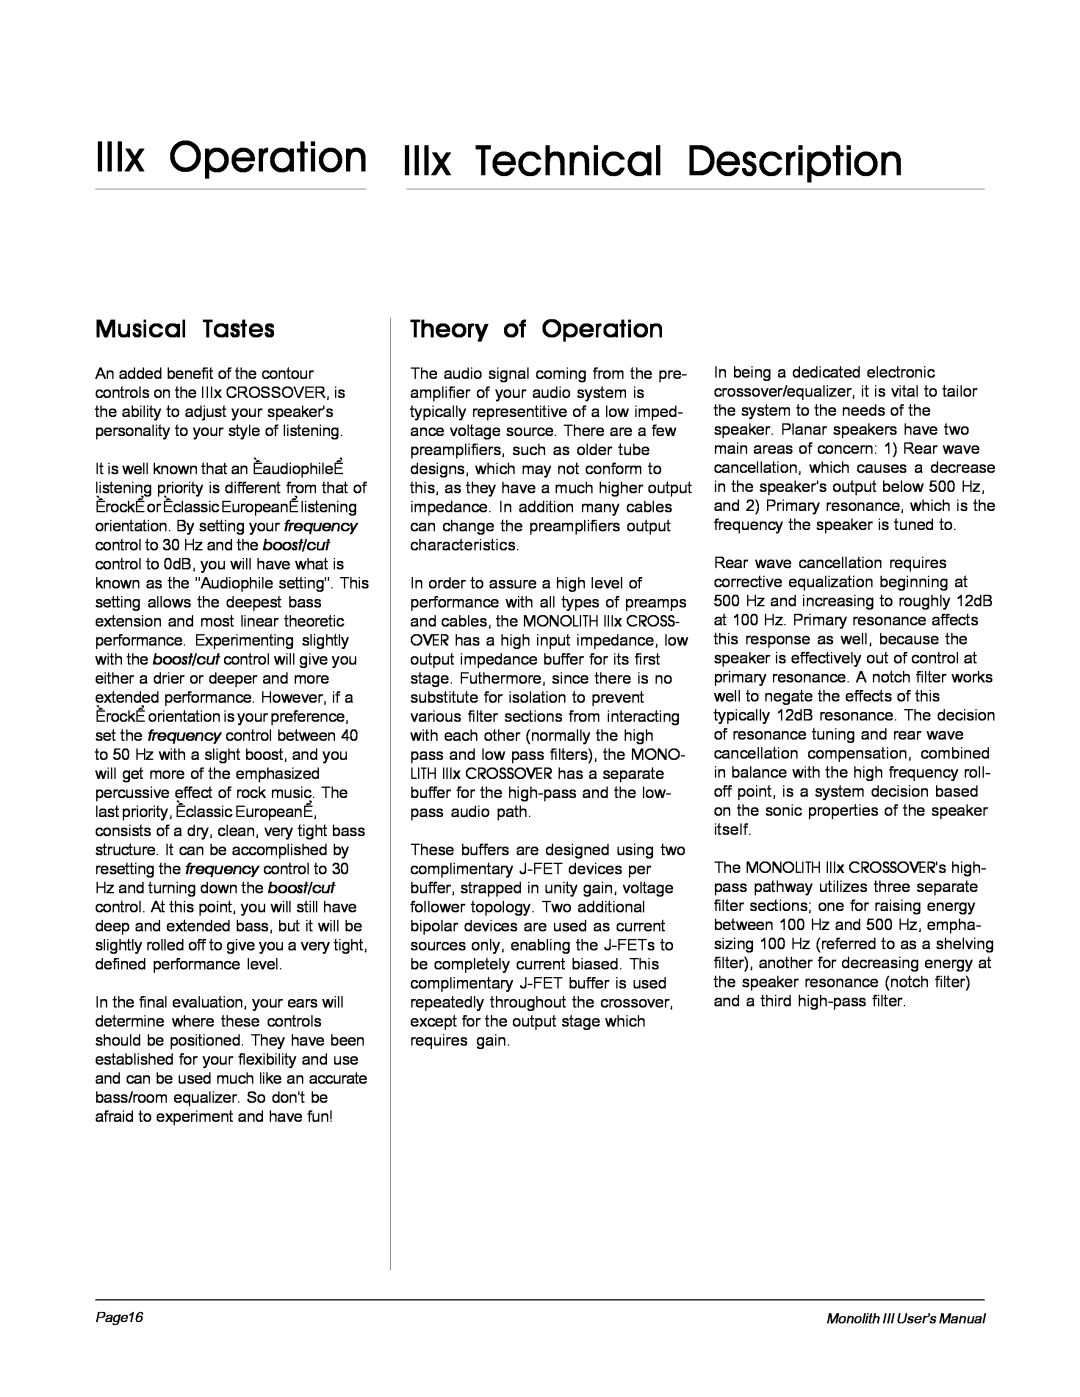 MartinLogan Monolith III user manual IIIx Operation IIIx Technical Description, Musical Tastes, Theory of Operation 